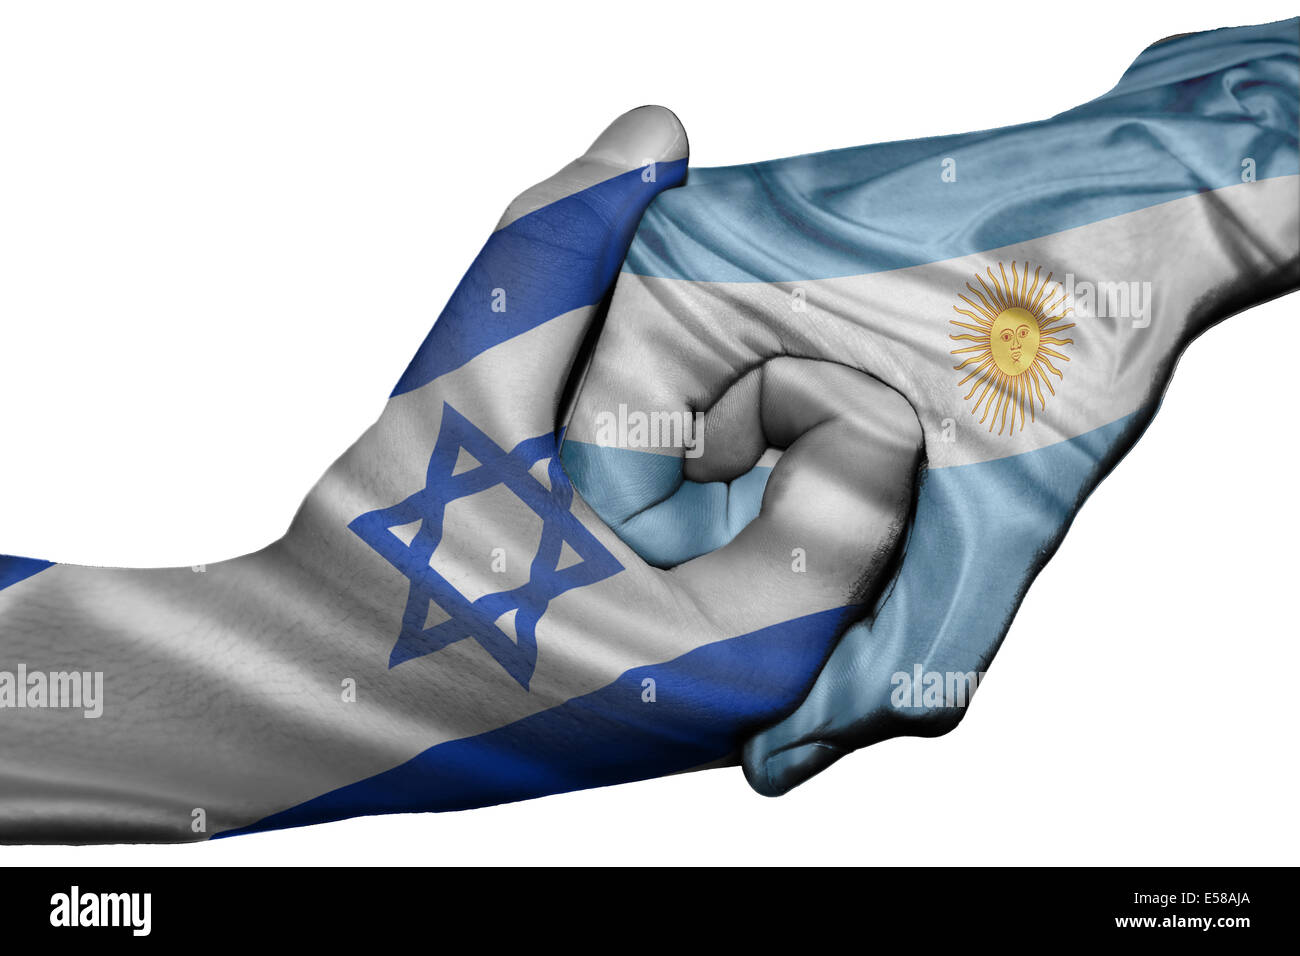 Handshake diplomatiche tra paesi: bandiere di Israele e Argentina sovradipinta le due mani Foto Stock